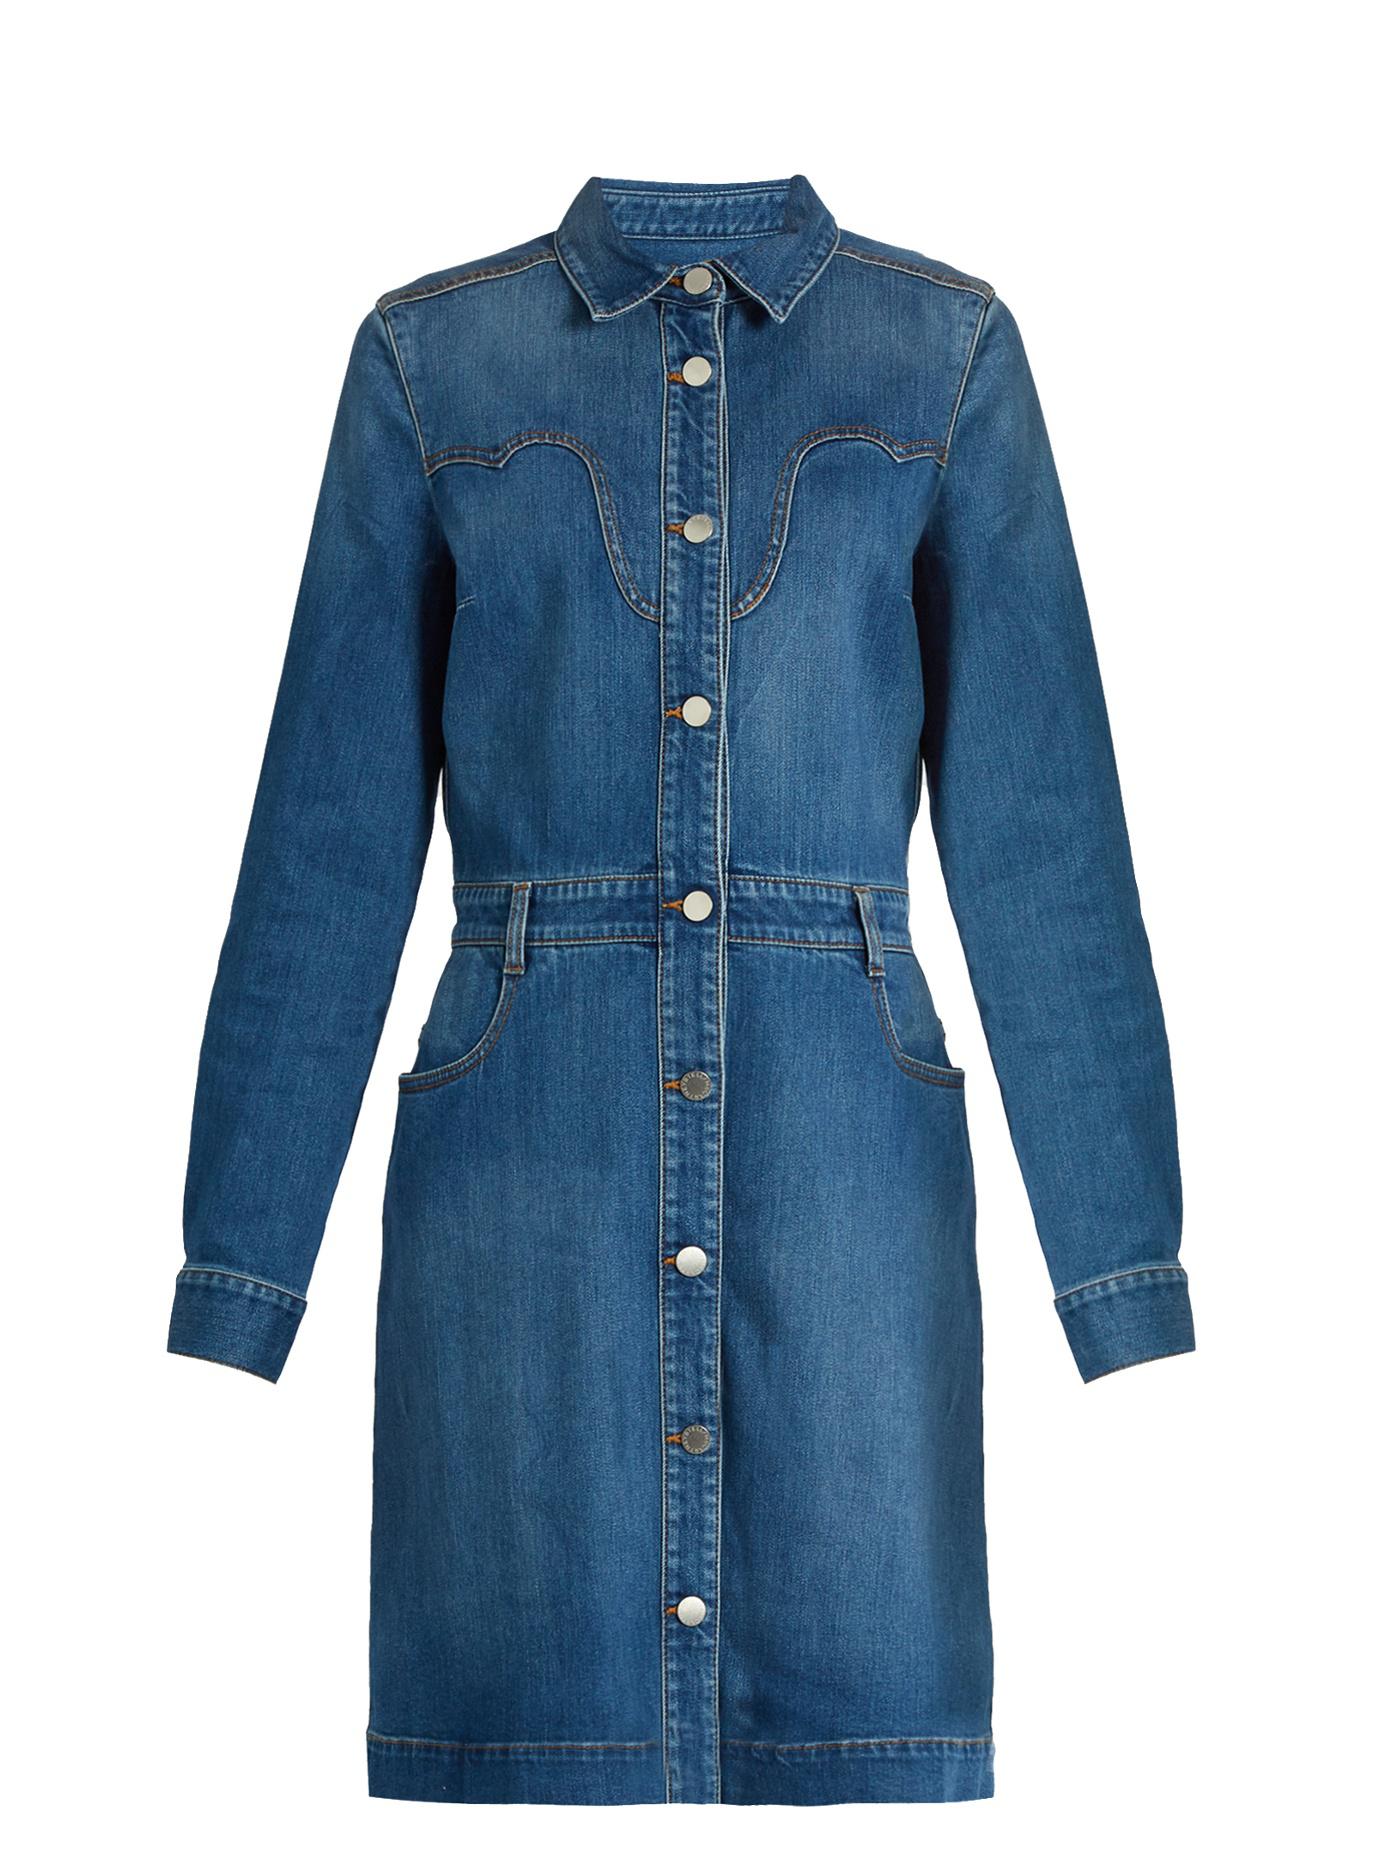 Stella McCartney Western Denim Dress in Blue - Lyst